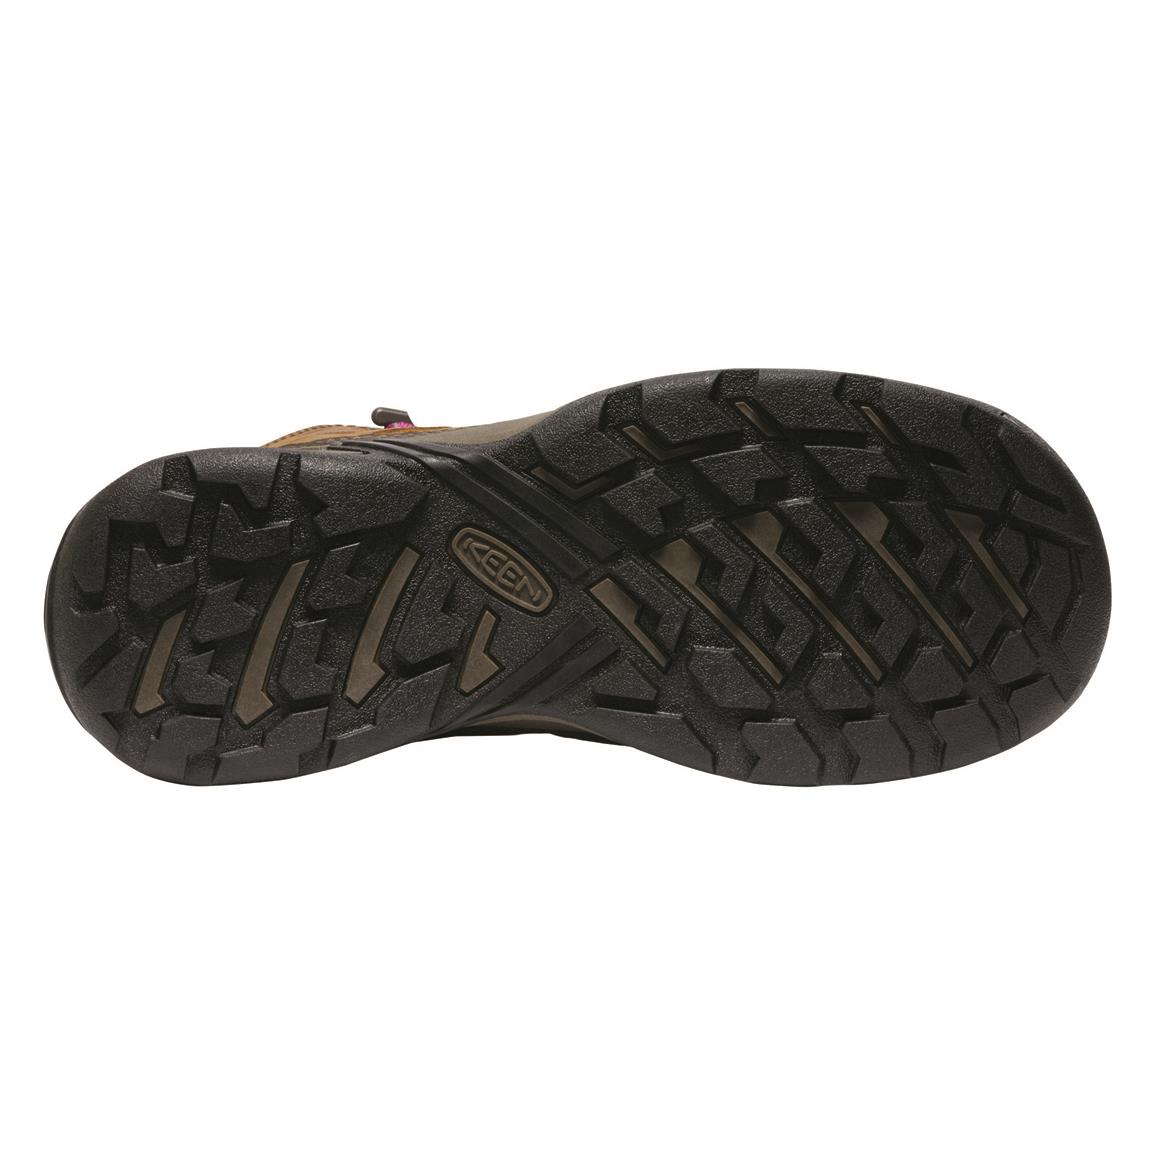 Northside Women's Croswell Low Waterproof Hiking Shoes - 730249, Hiking ...